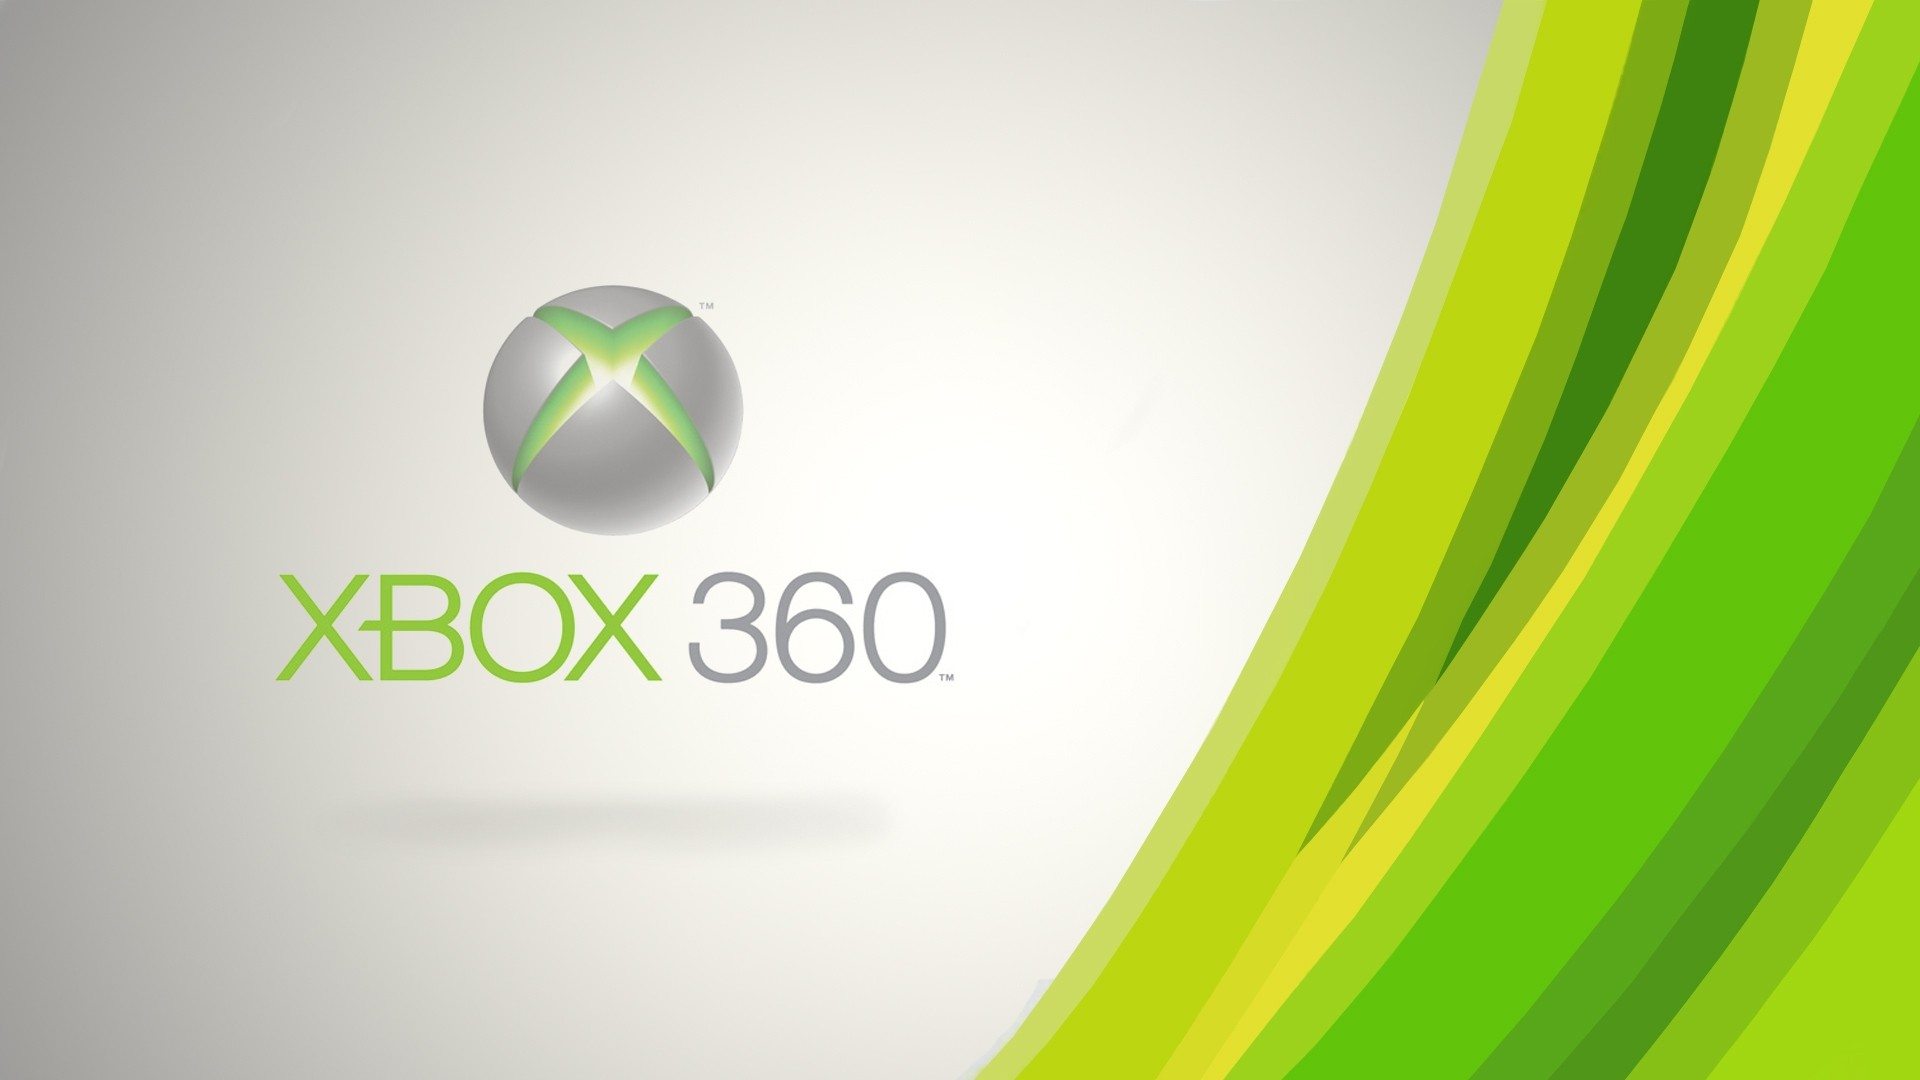 Xbox 360 Wallpapers Hd wallpaper   929458